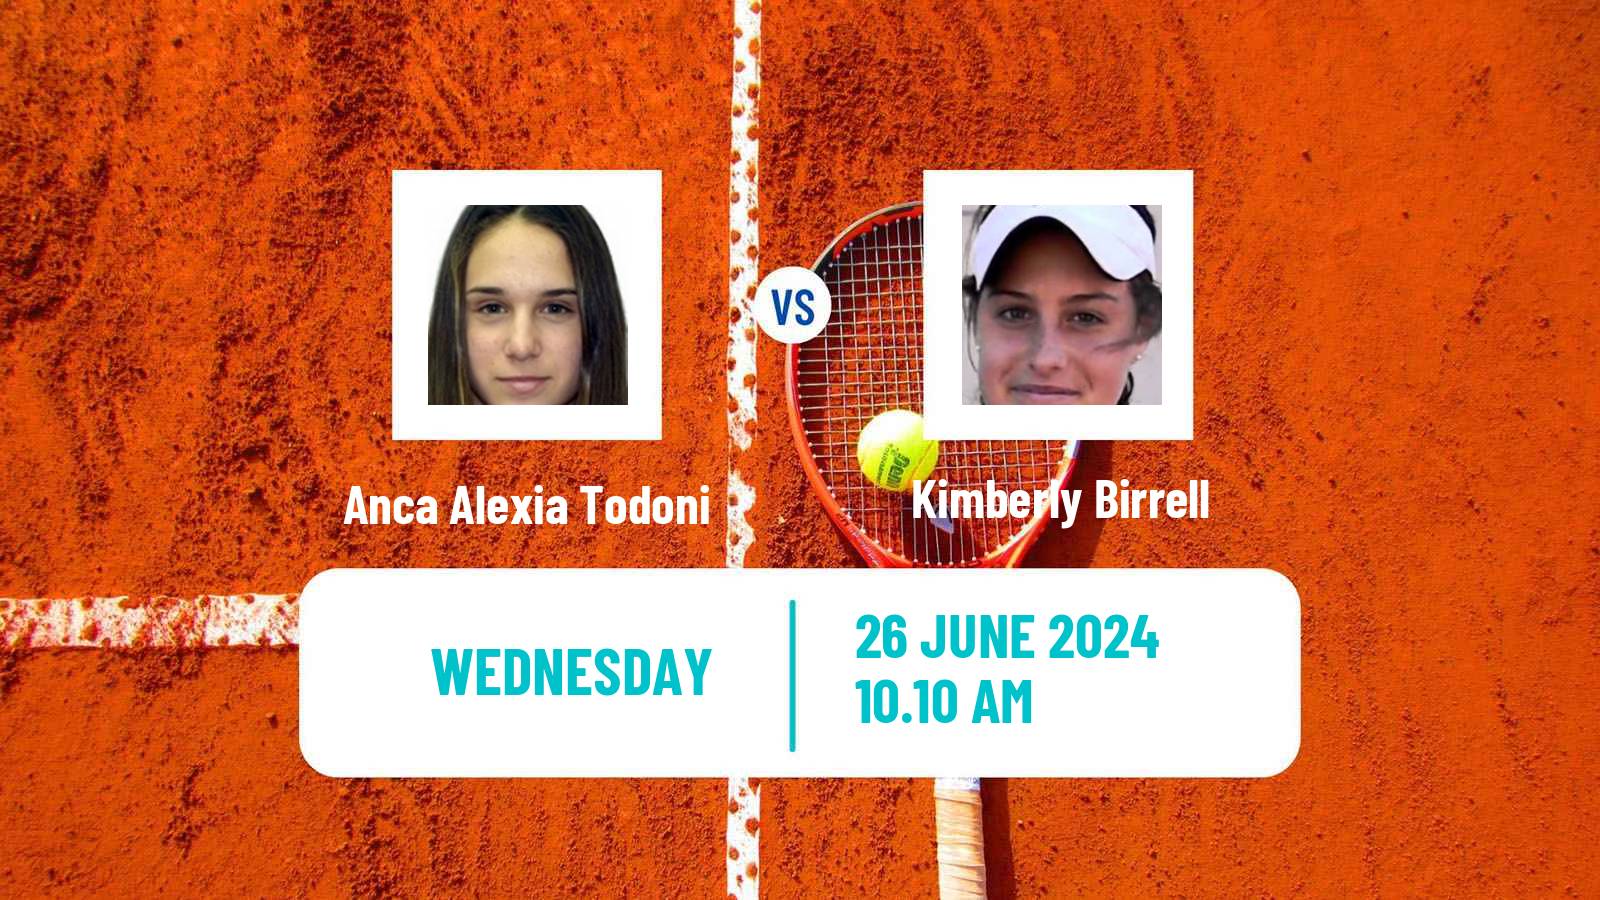 Tennis WTA Wimbledon Anca Alexia Todoni - Kimberly Birrell